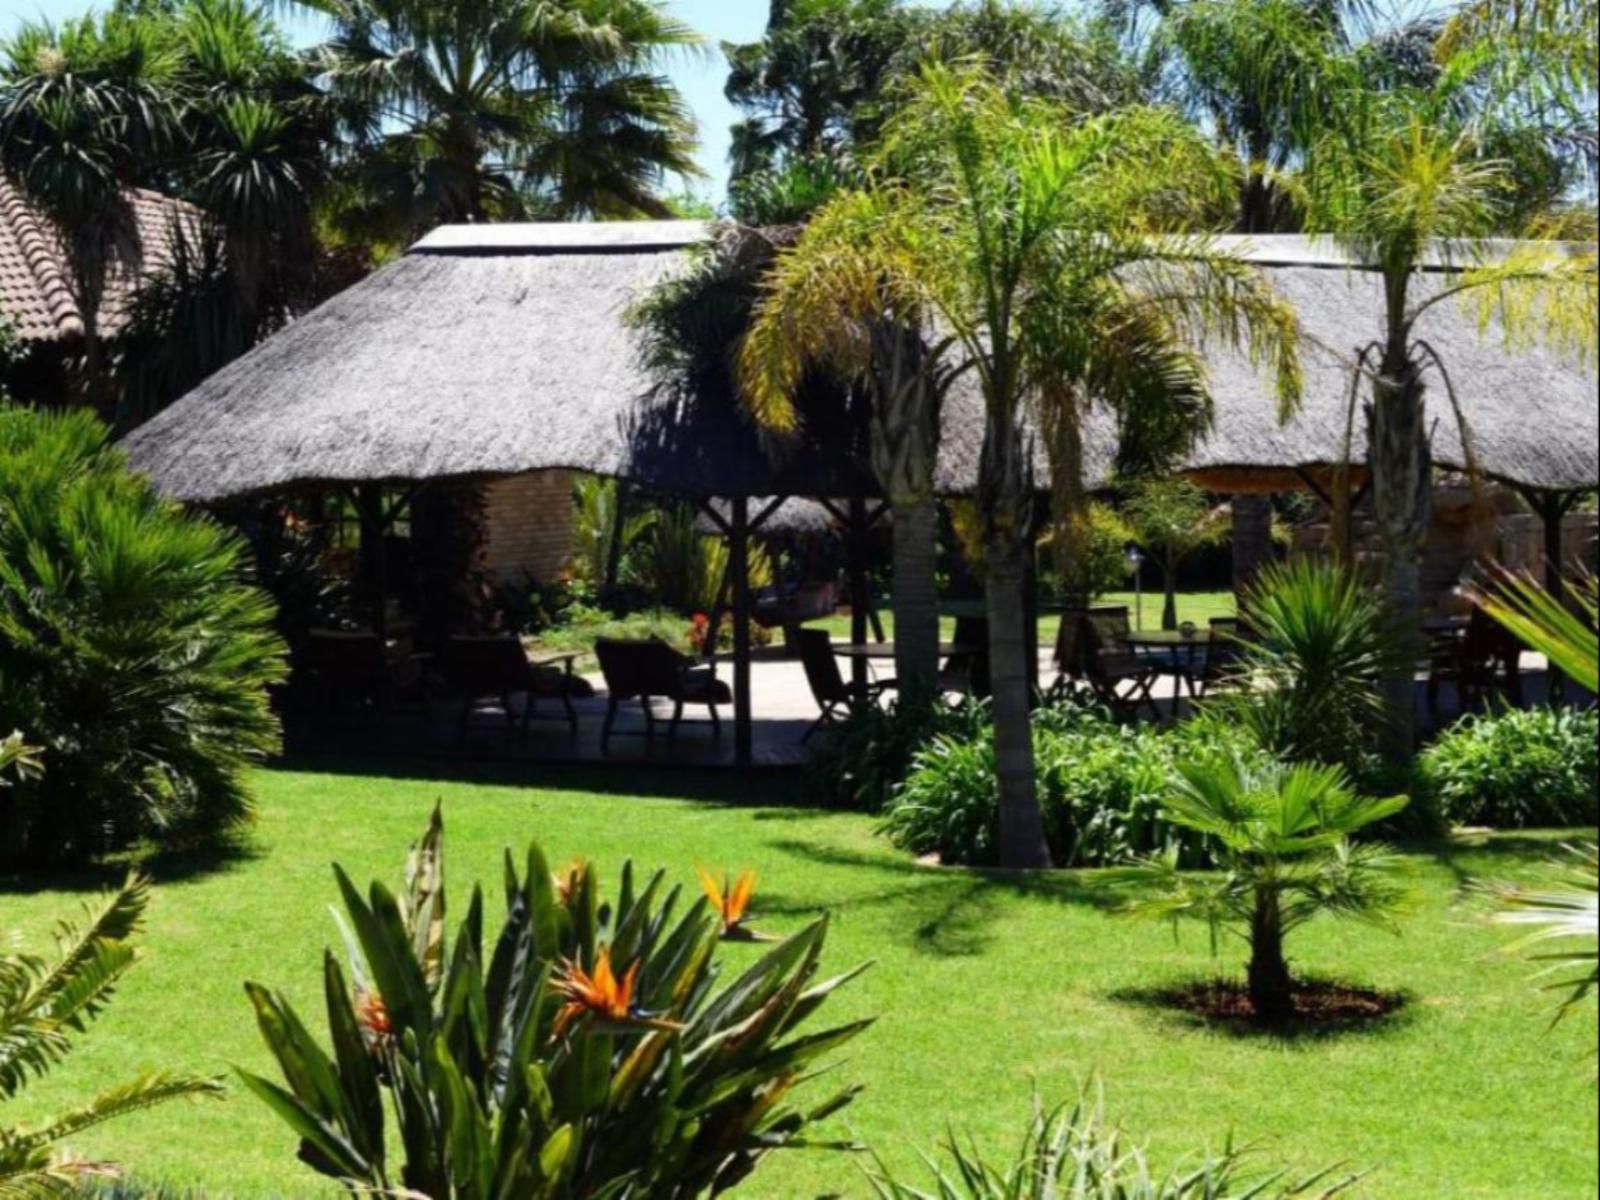 Avant Garde Lodge Kempton Park Johannesburg Gauteng South Africa House, Building, Architecture, Palm Tree, Plant, Nature, Wood